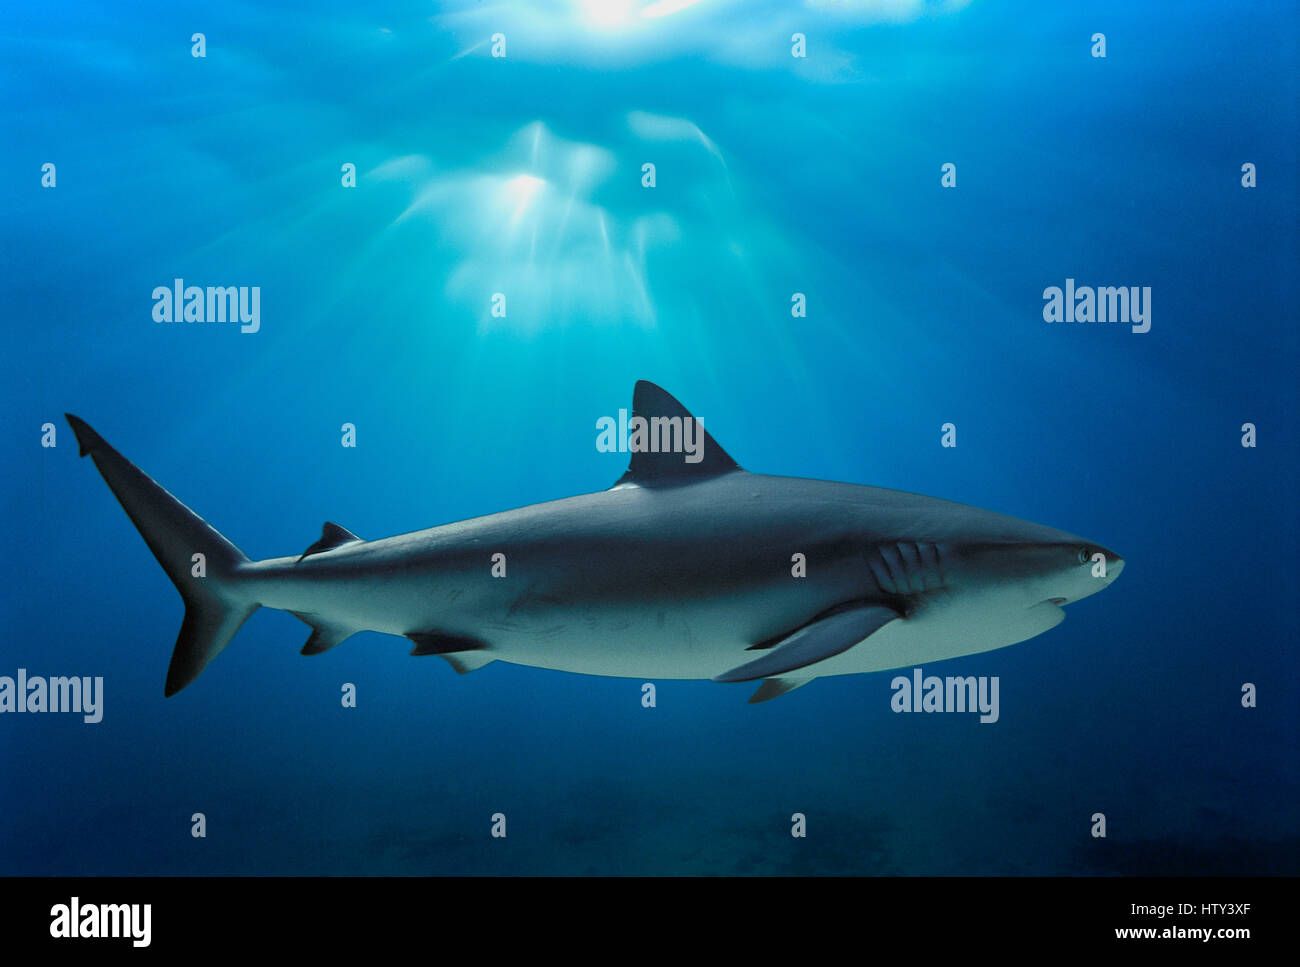 Karibischen Riffhai (Carcharhinus Perezi), Bahamas - Karibik. Bild digital manipuliert. Stockfoto